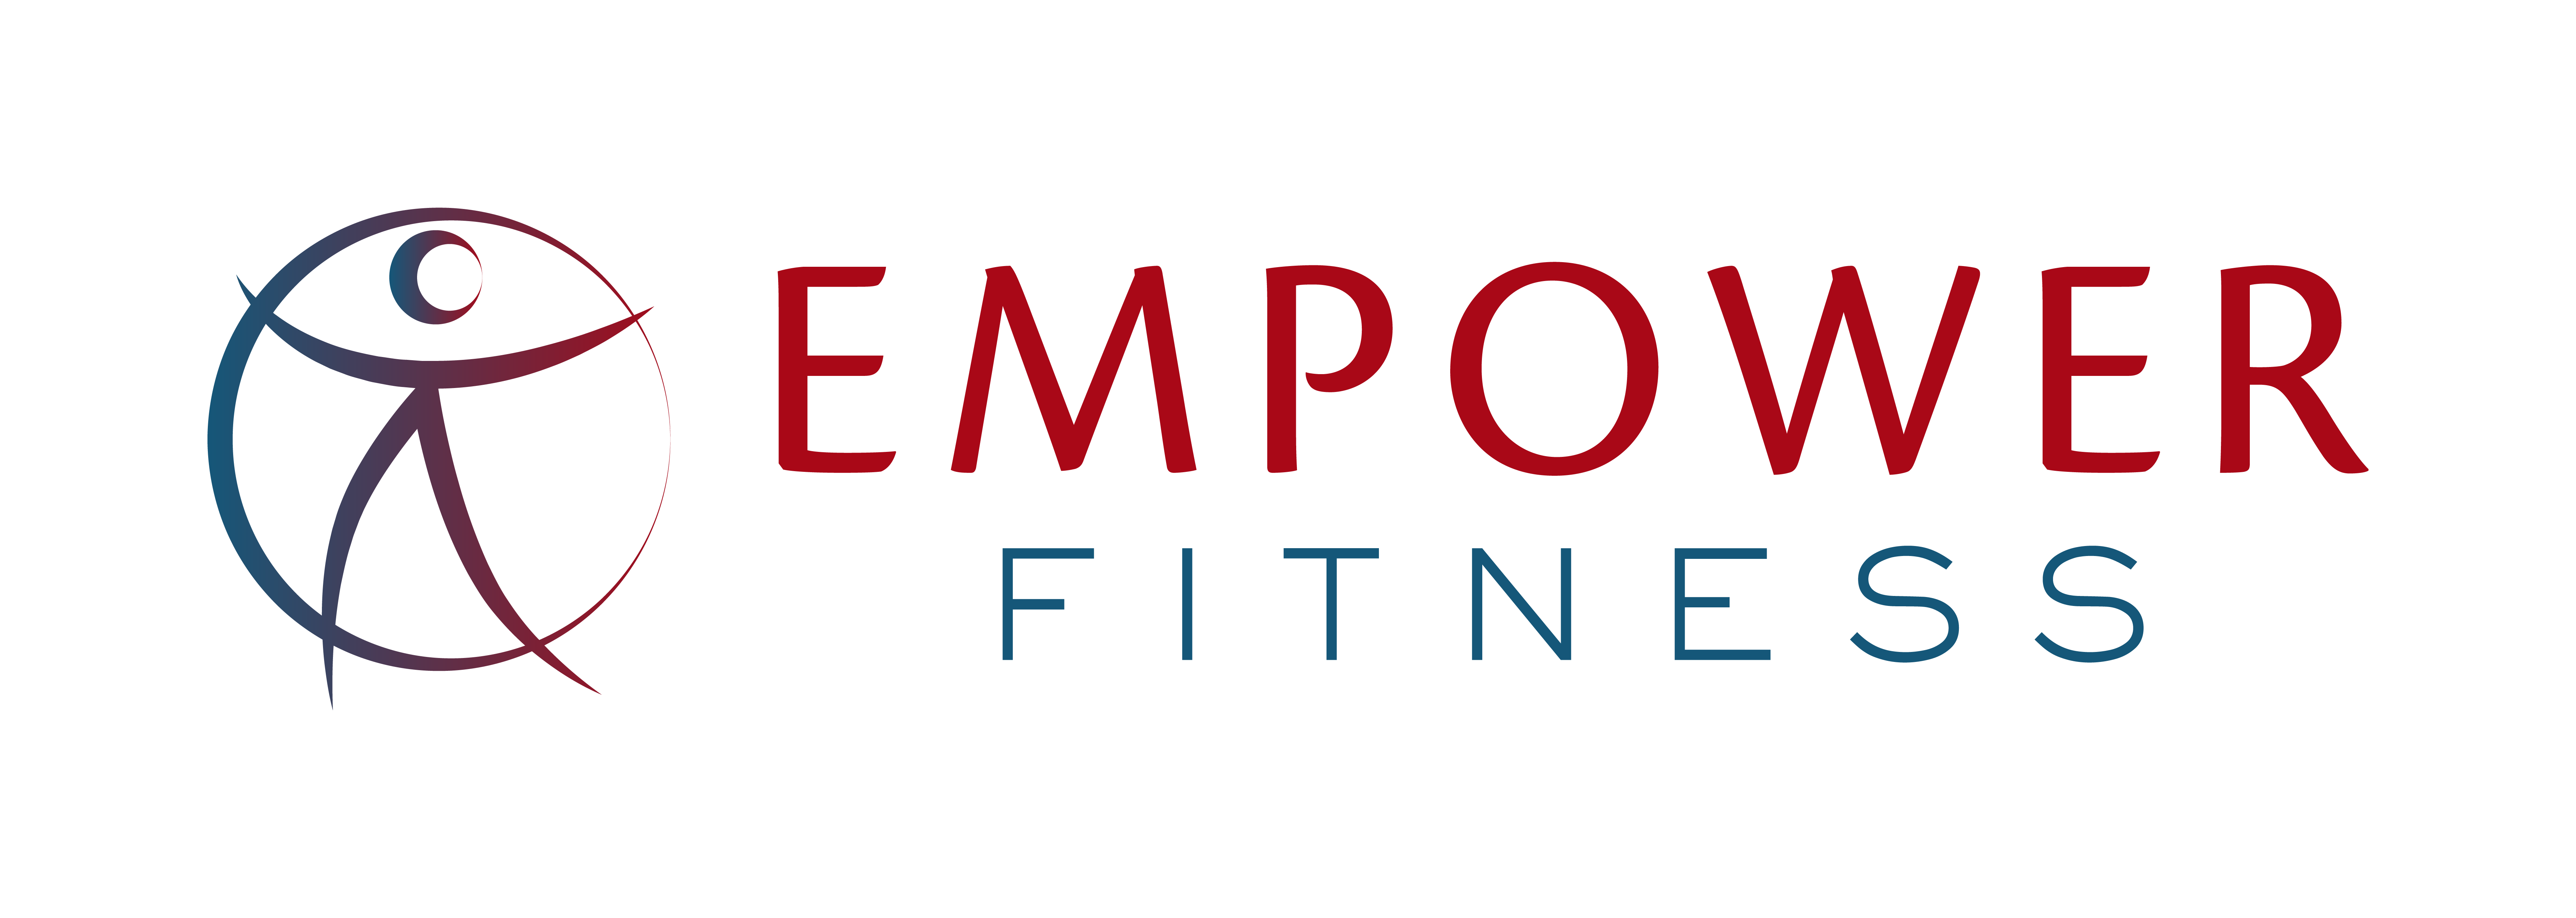 Empower Fitness